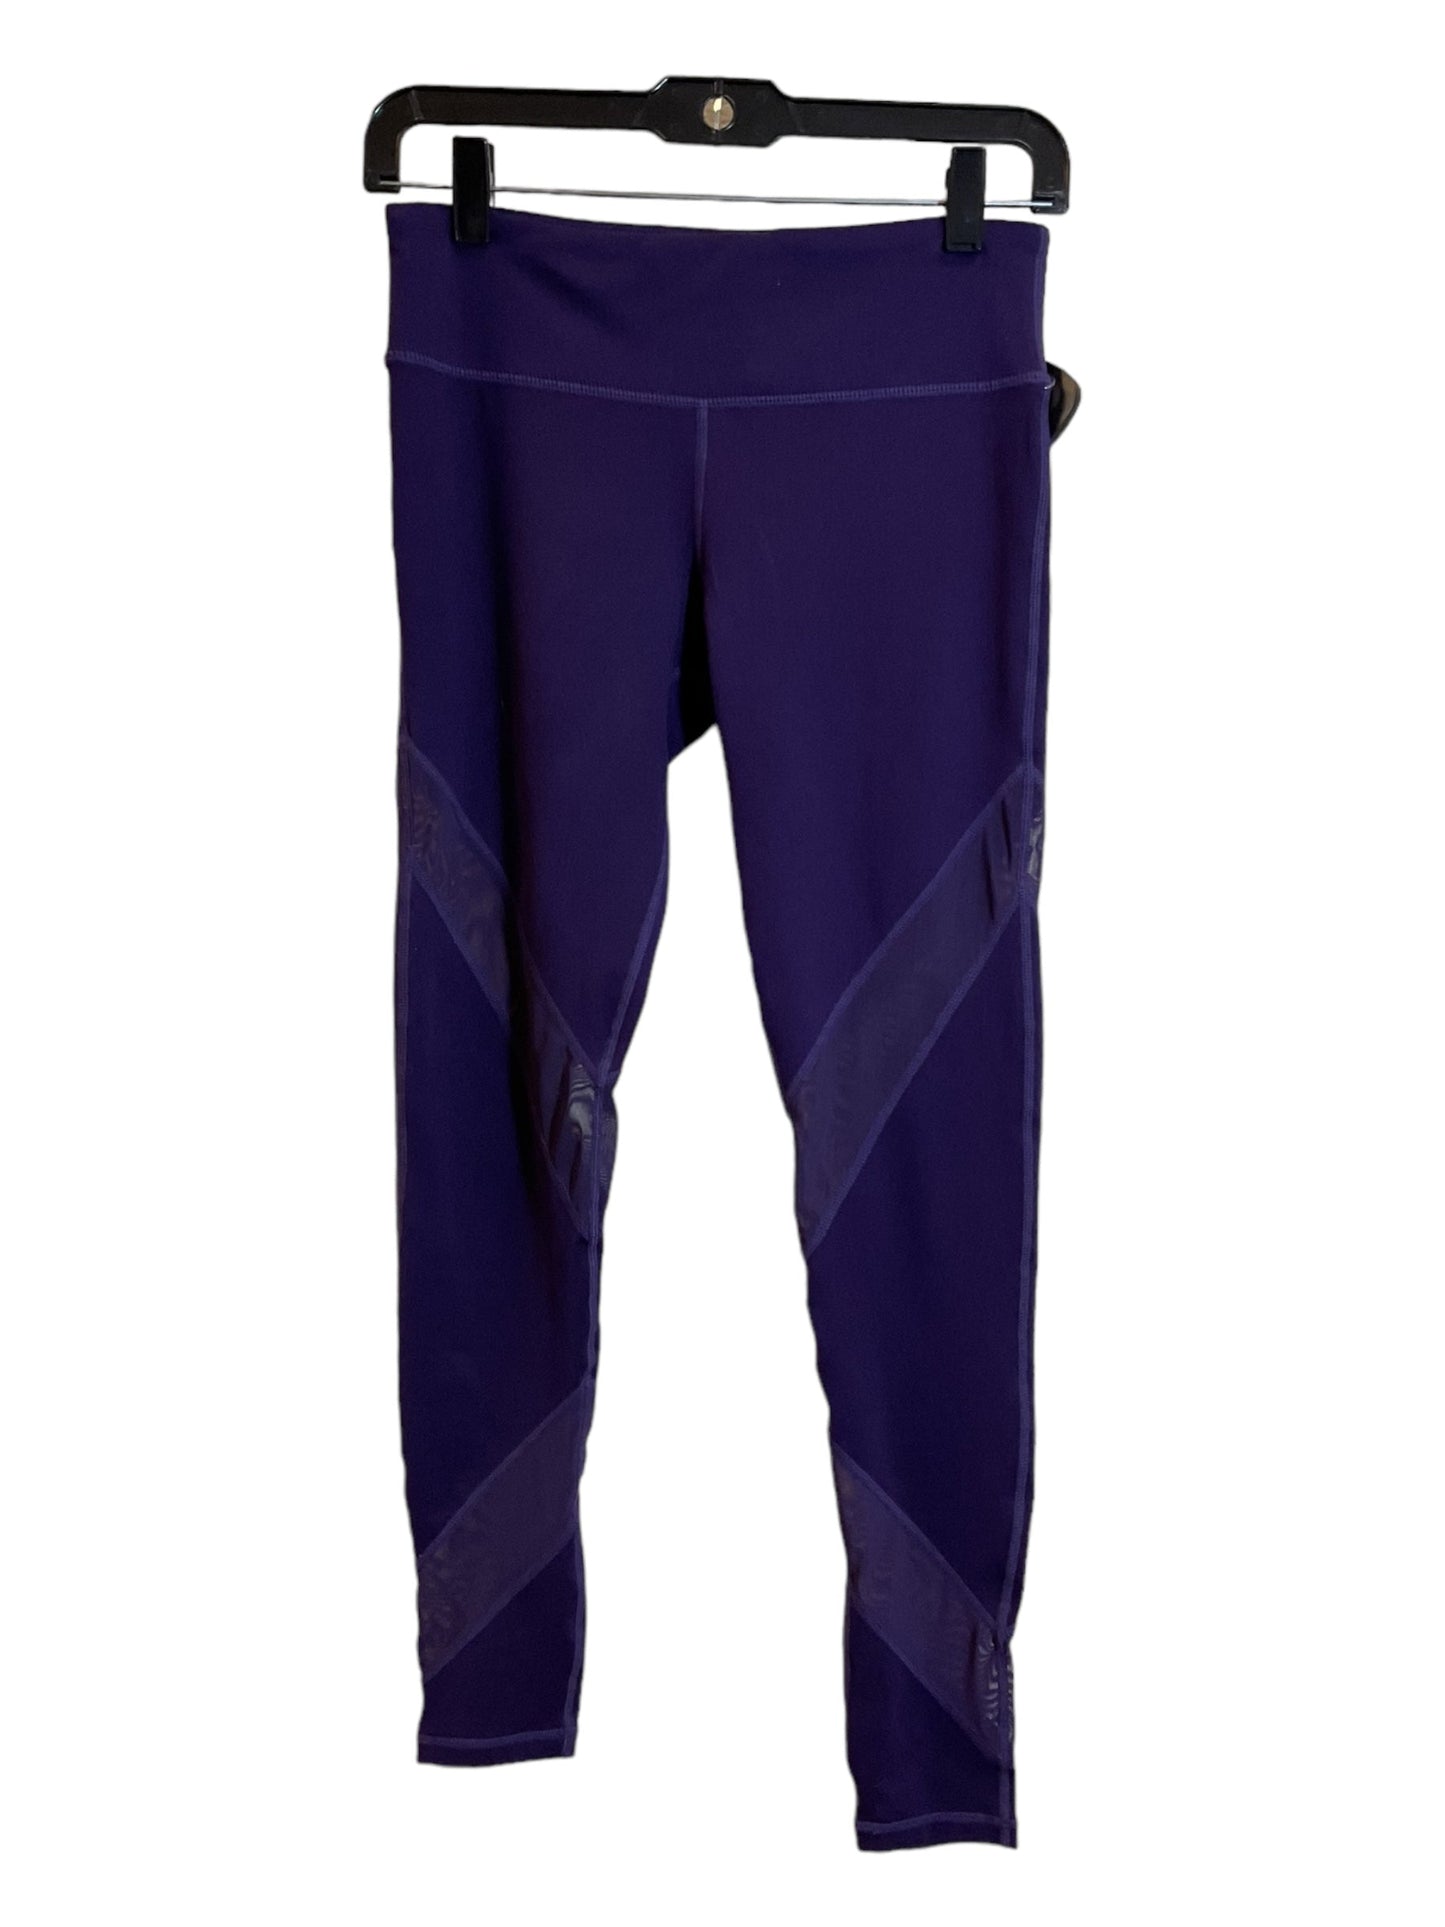 Purple Athletic Leggings Mono B, Size S